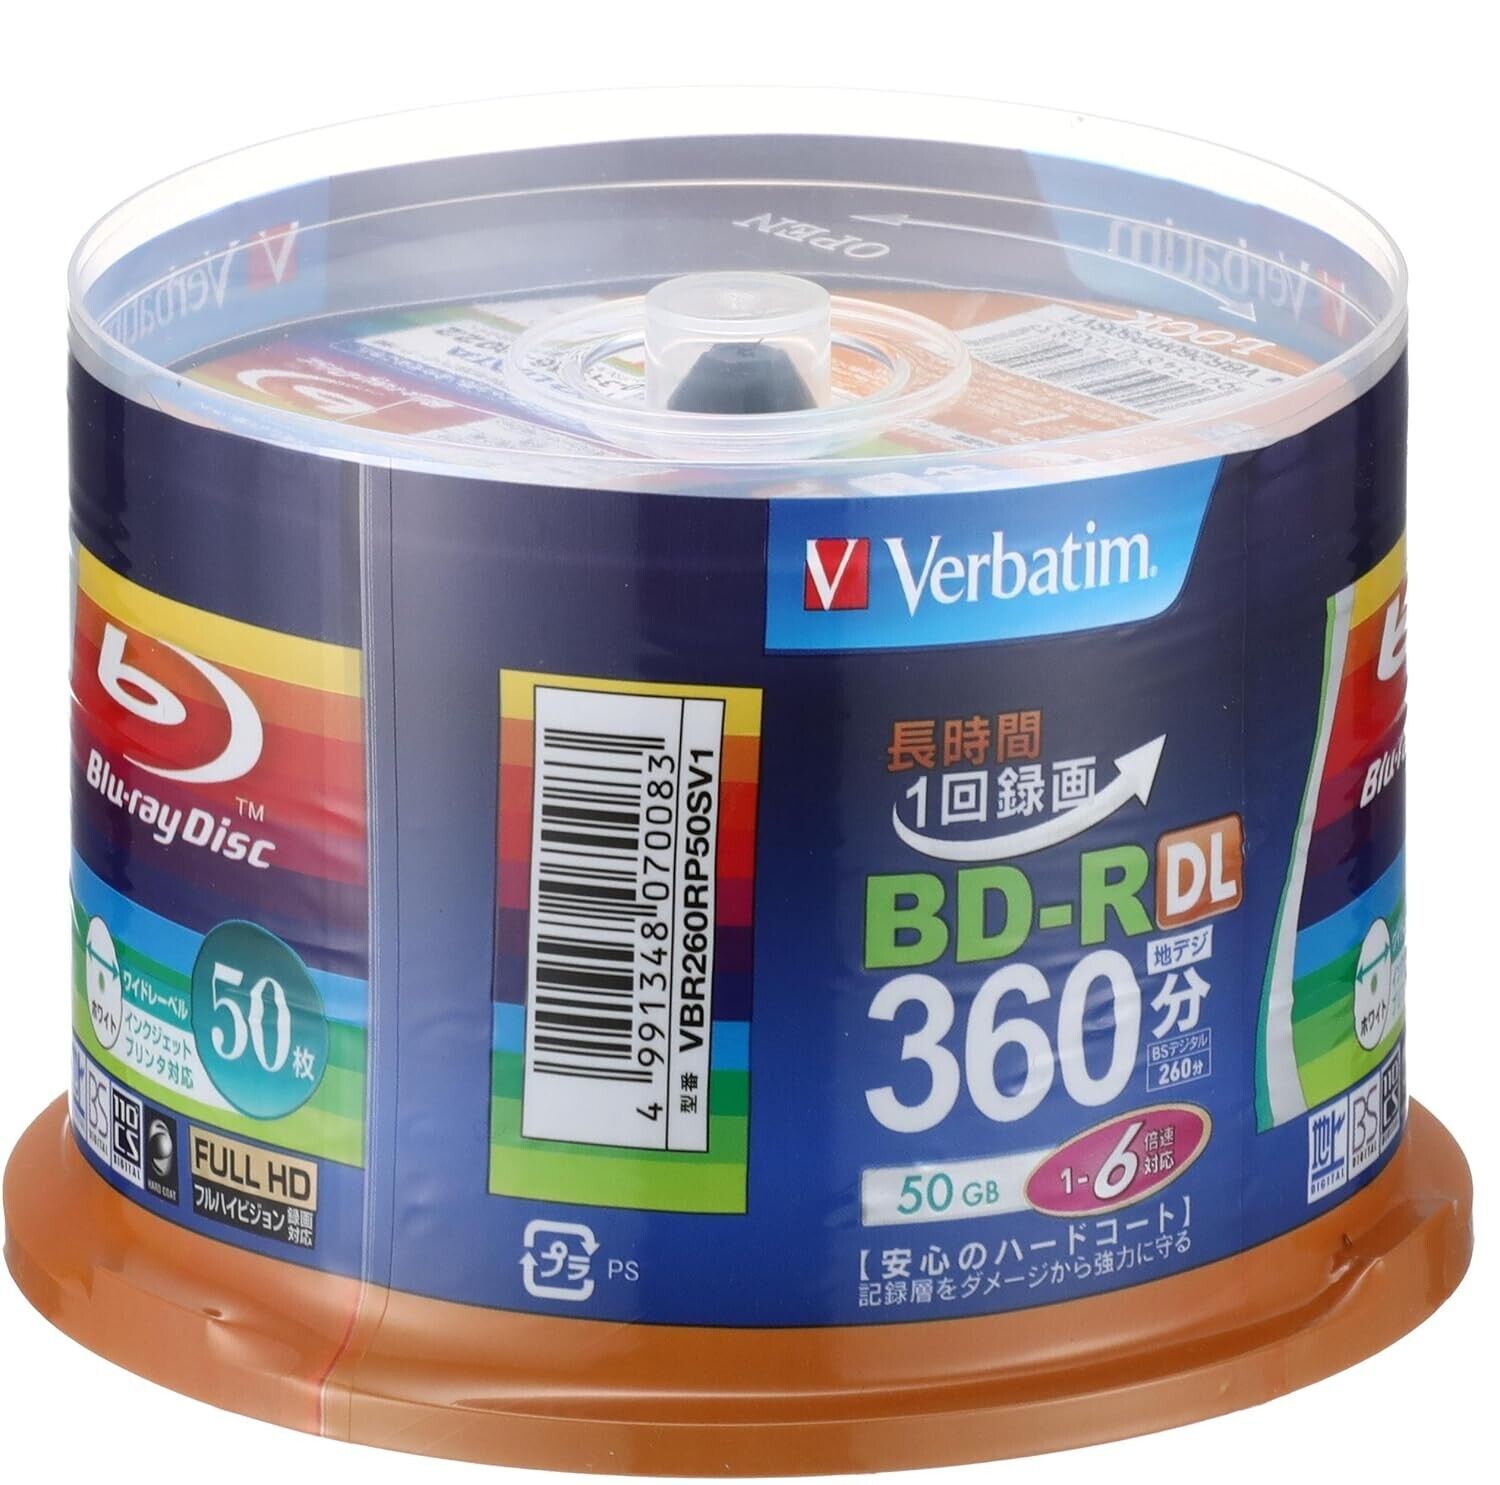 Blank Blu-ray BD-R DL 50GB 1-6x 50 discs VBR260RP50SV1 Inkjet Printable Verbatim